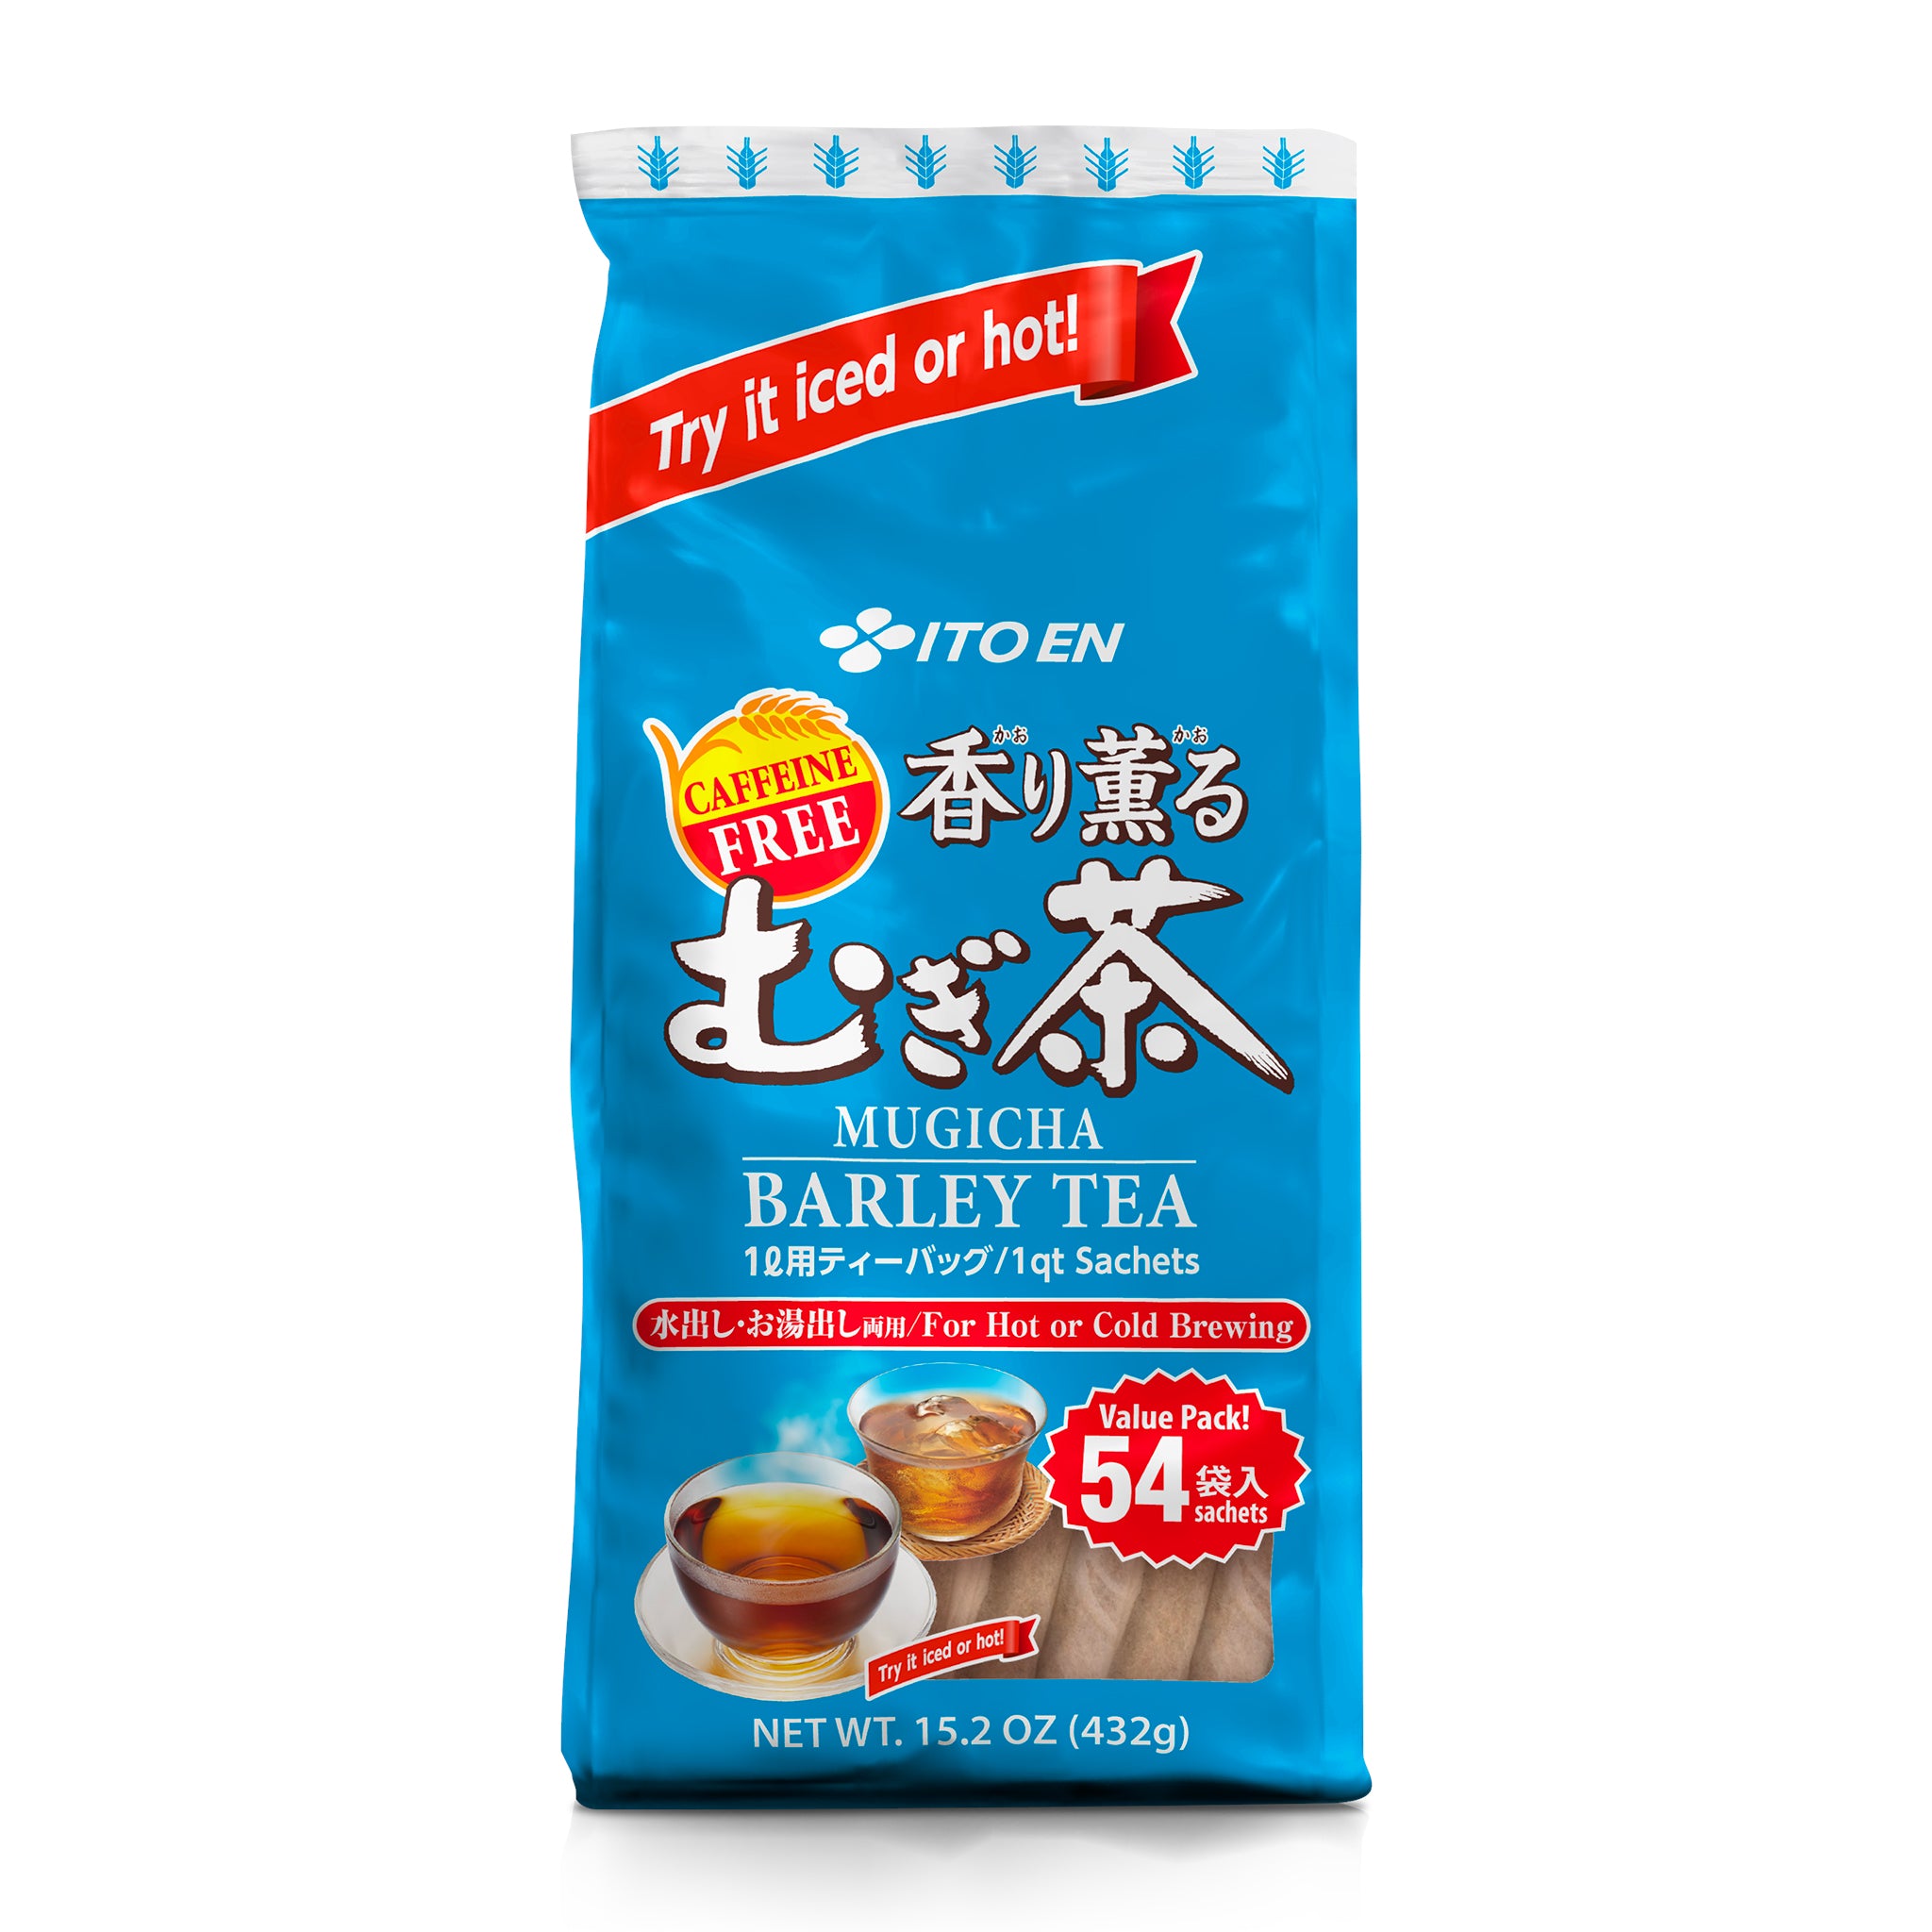 Mugicha Barley Tea Bags